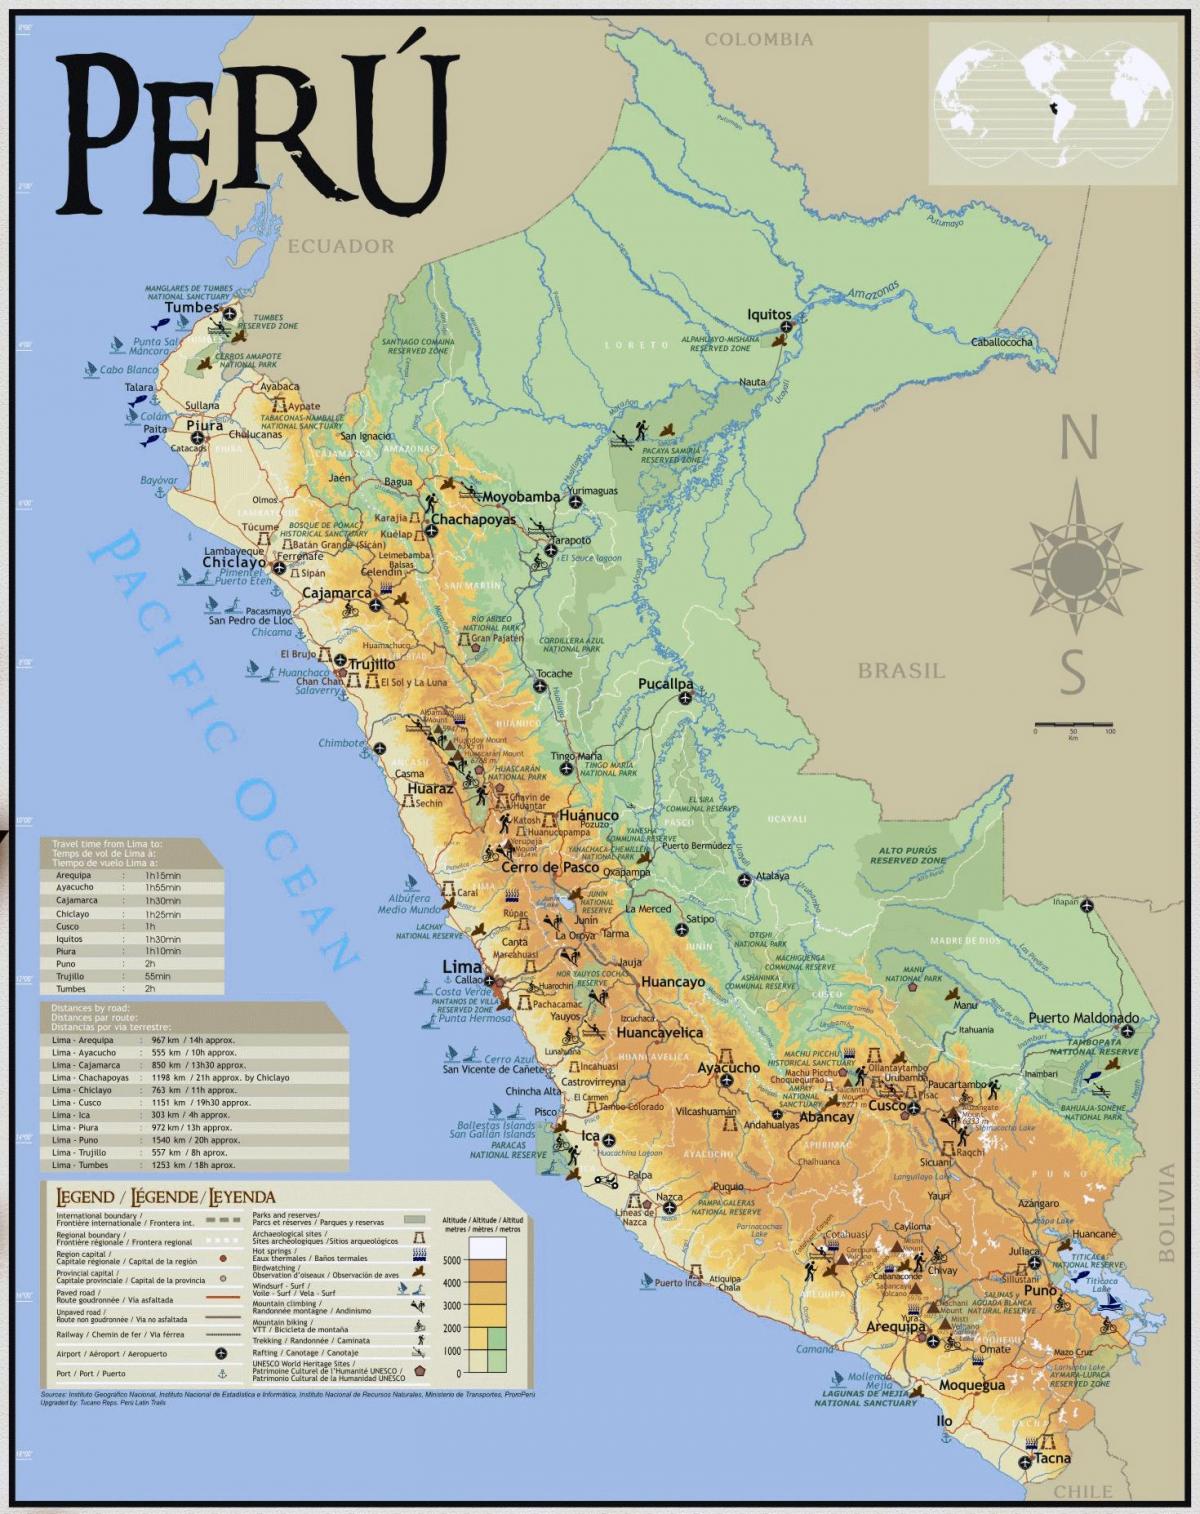 Peru turistik haritası